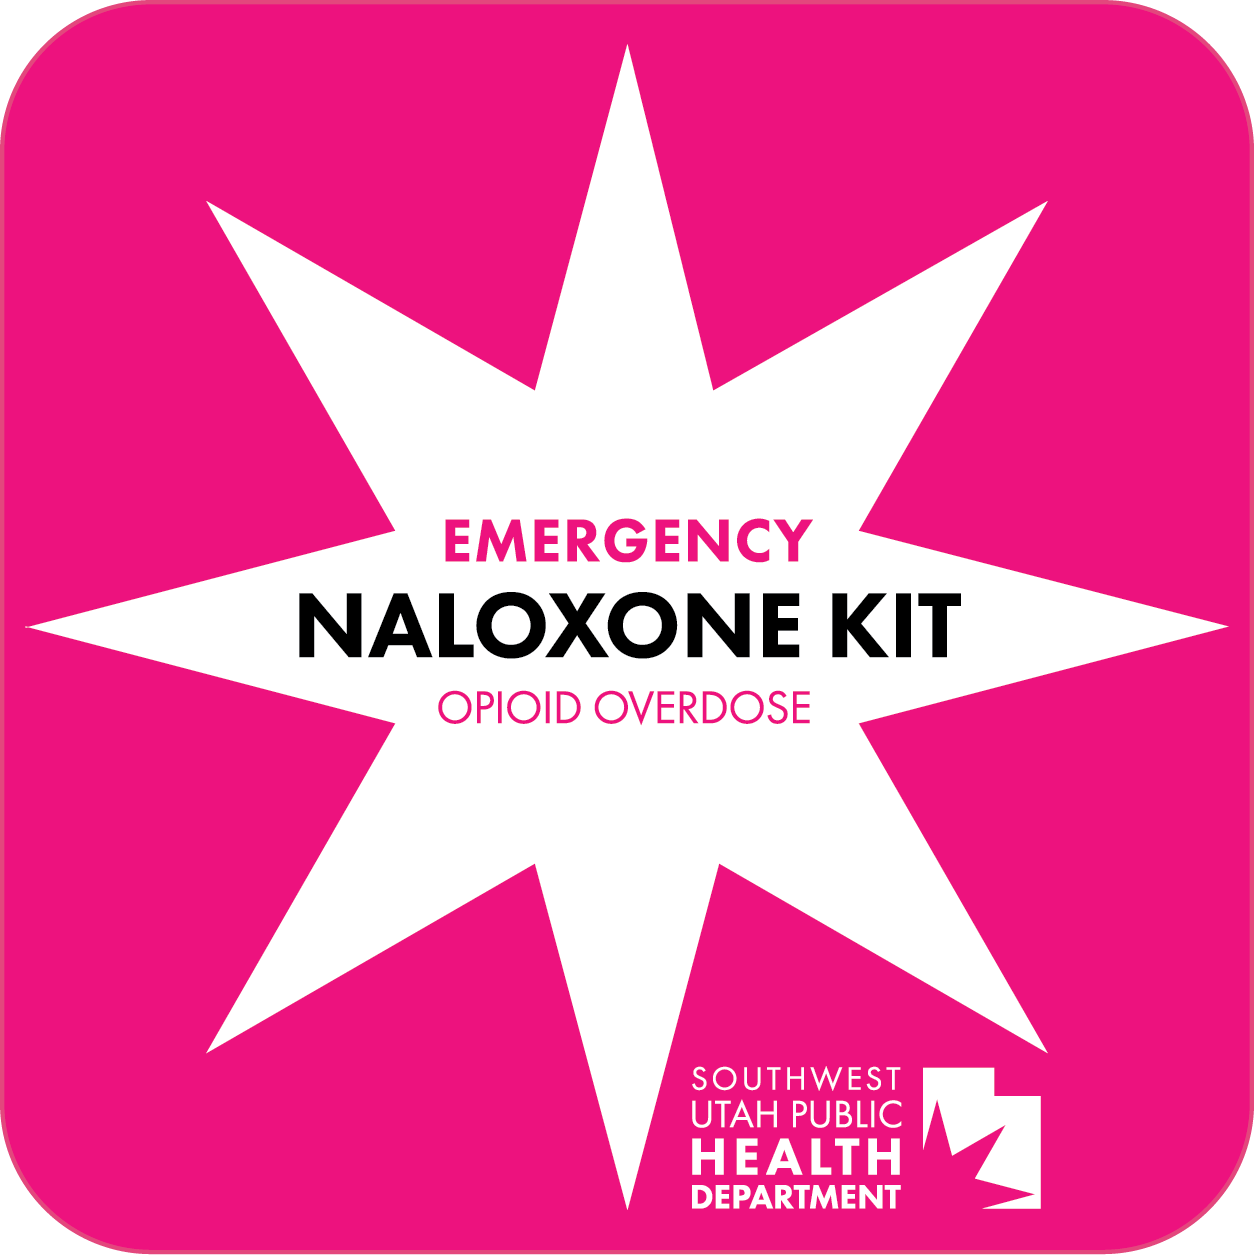 emergency naloxone kit opioid misuse prevention logo for southwest utah public health department